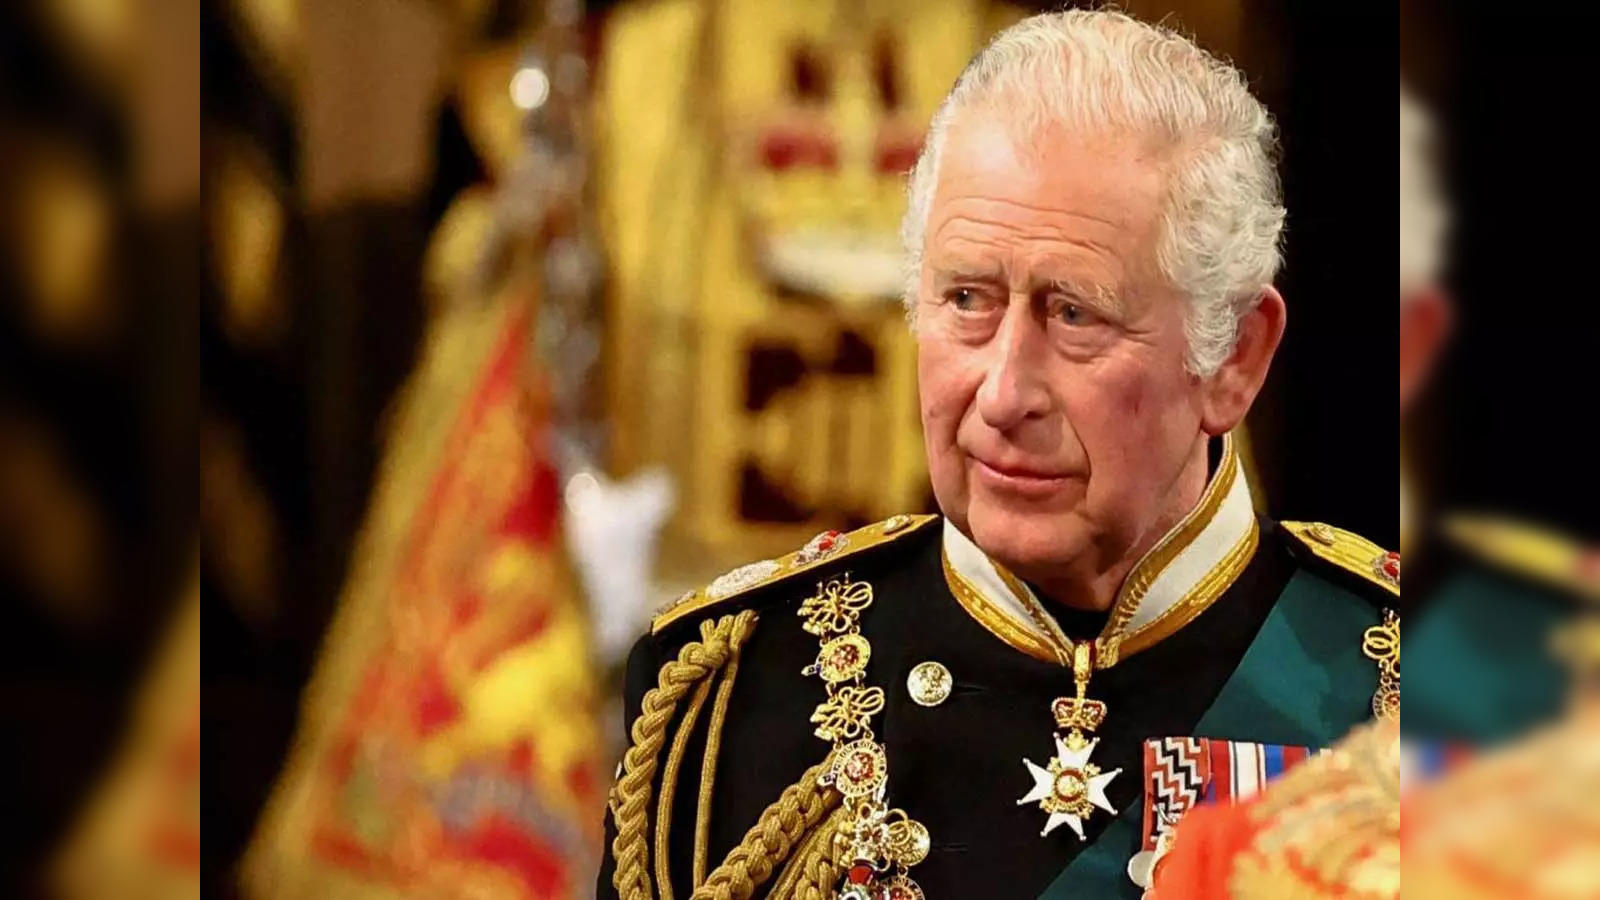 Expert on King Charles vs Prince William: 